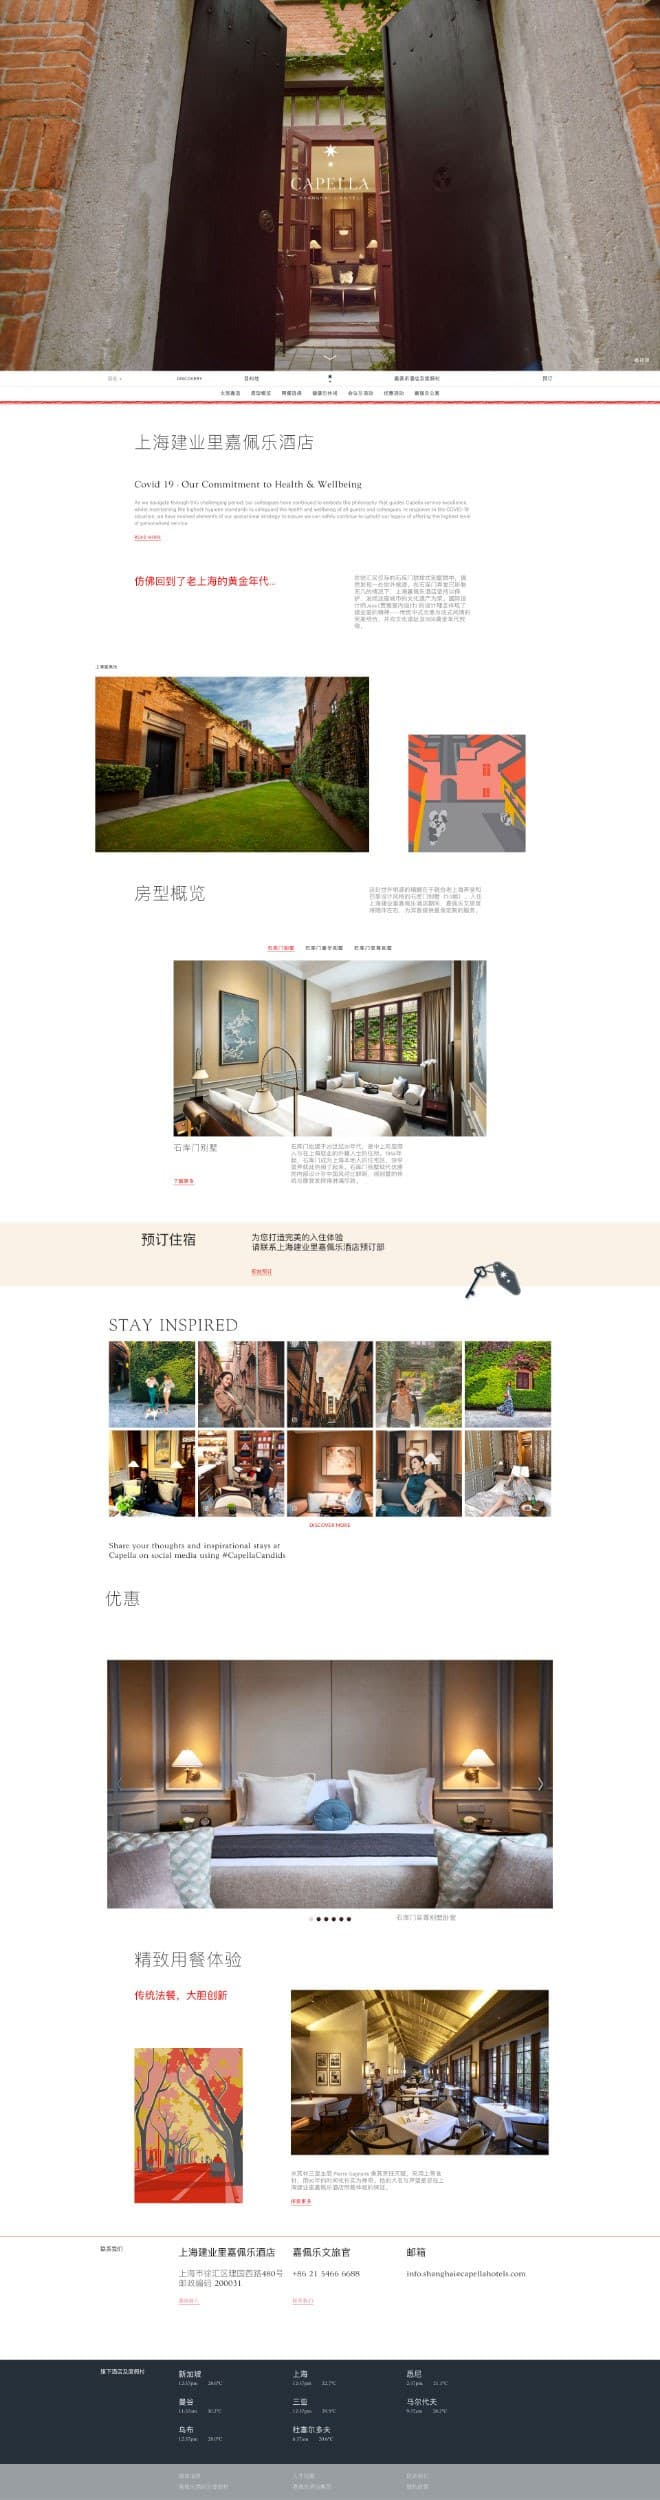 Capella Hotels & Resorts - Shanghai (Chinese Translation)